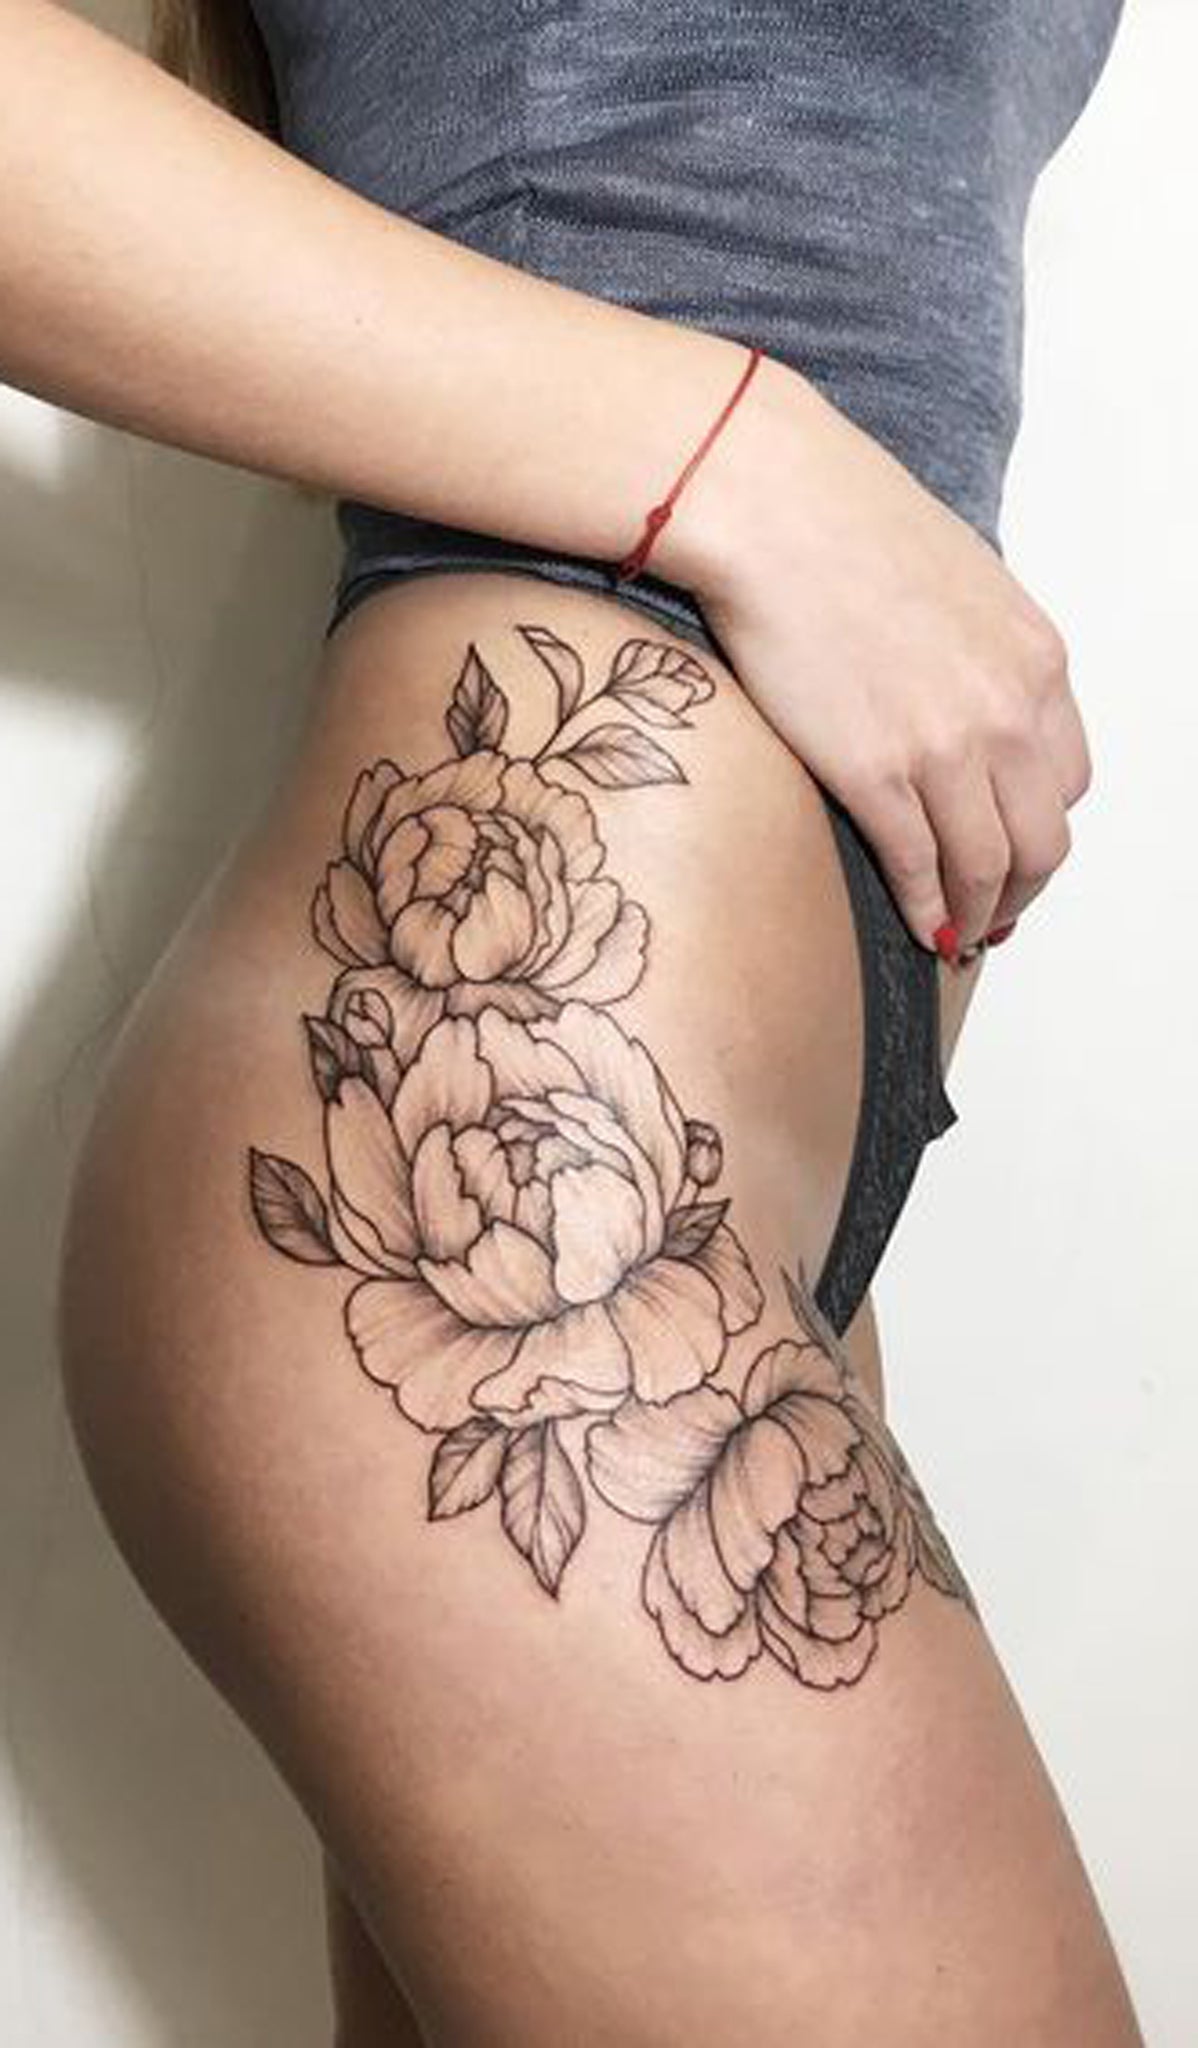 Wild Rose Thigh Tattoo Ideas for Women - Floral Flower Leg Hip Tat - ideas de tatuaje de rosa salvaje - www.MyBodiArt.com